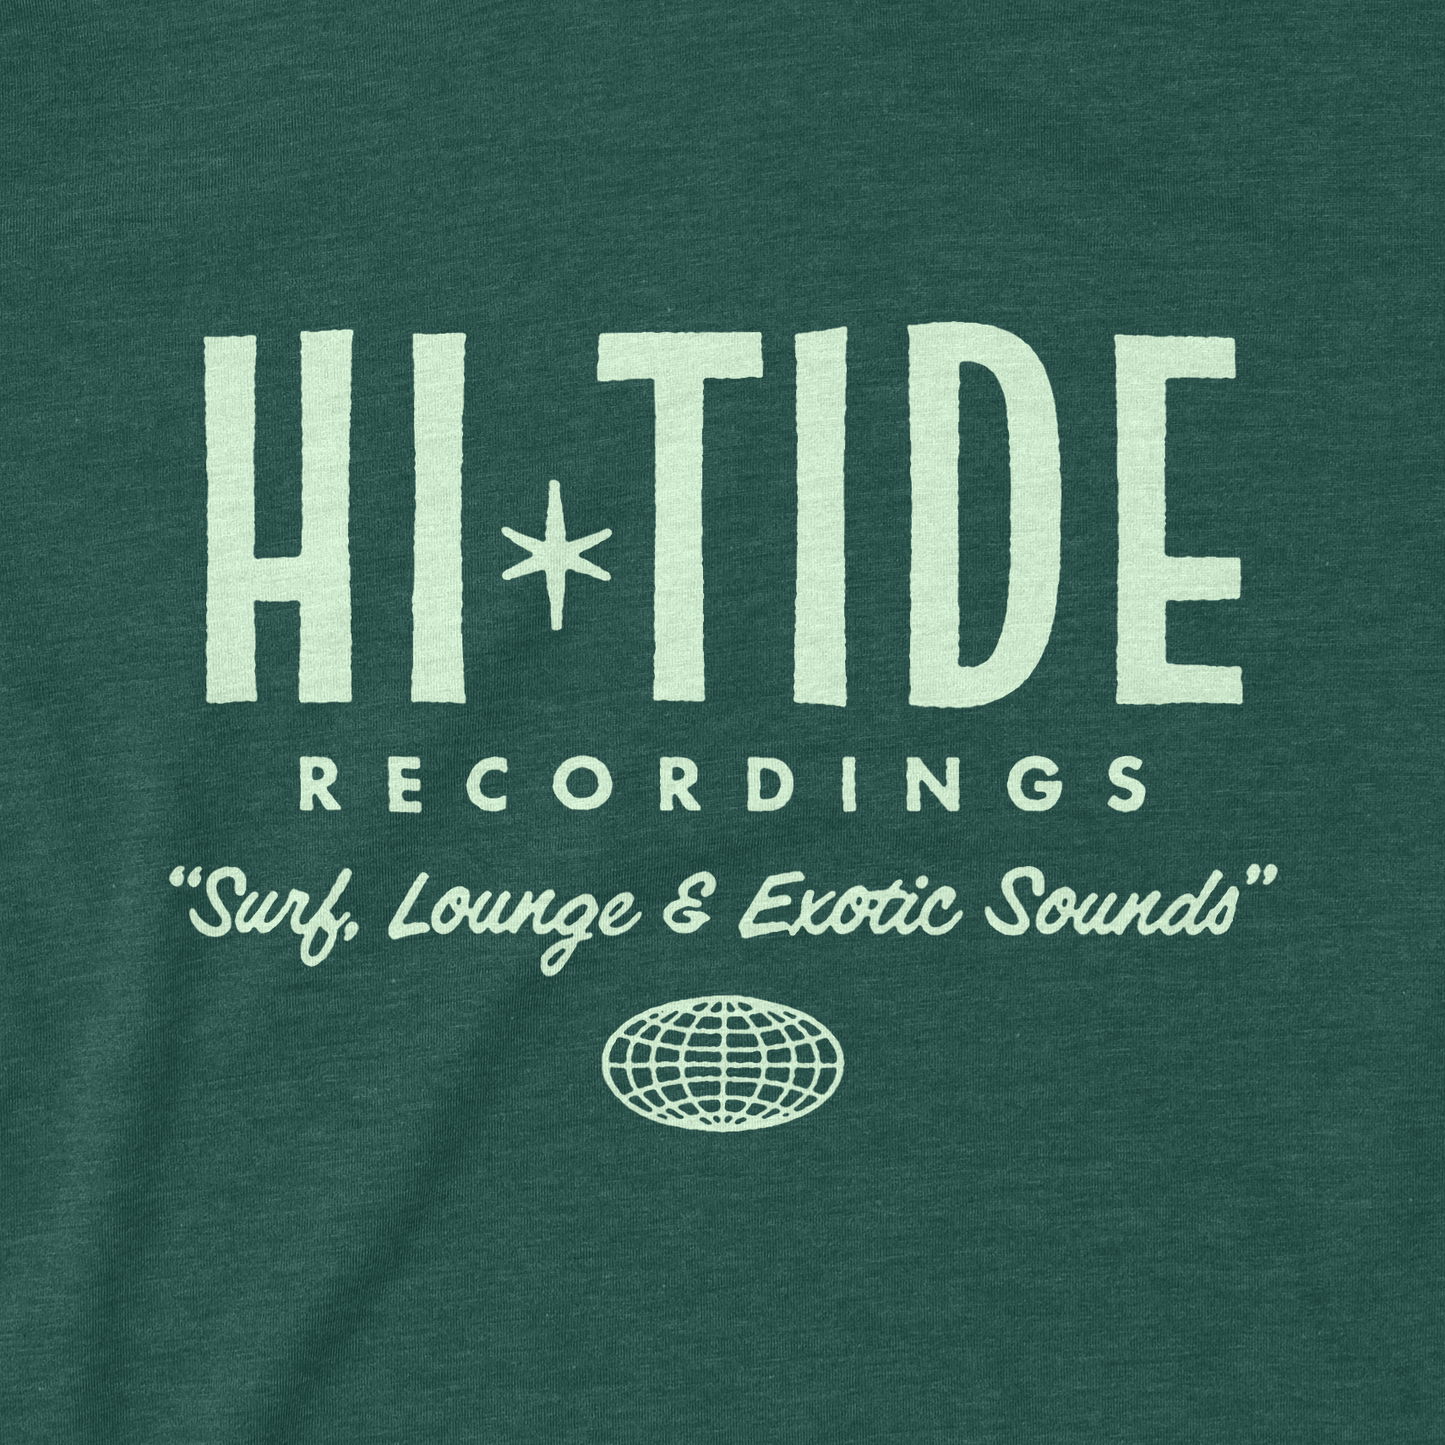 Hi-Tide Recordings "Surf, Lounge & Exotic Sounds T (Ocean Tropic)